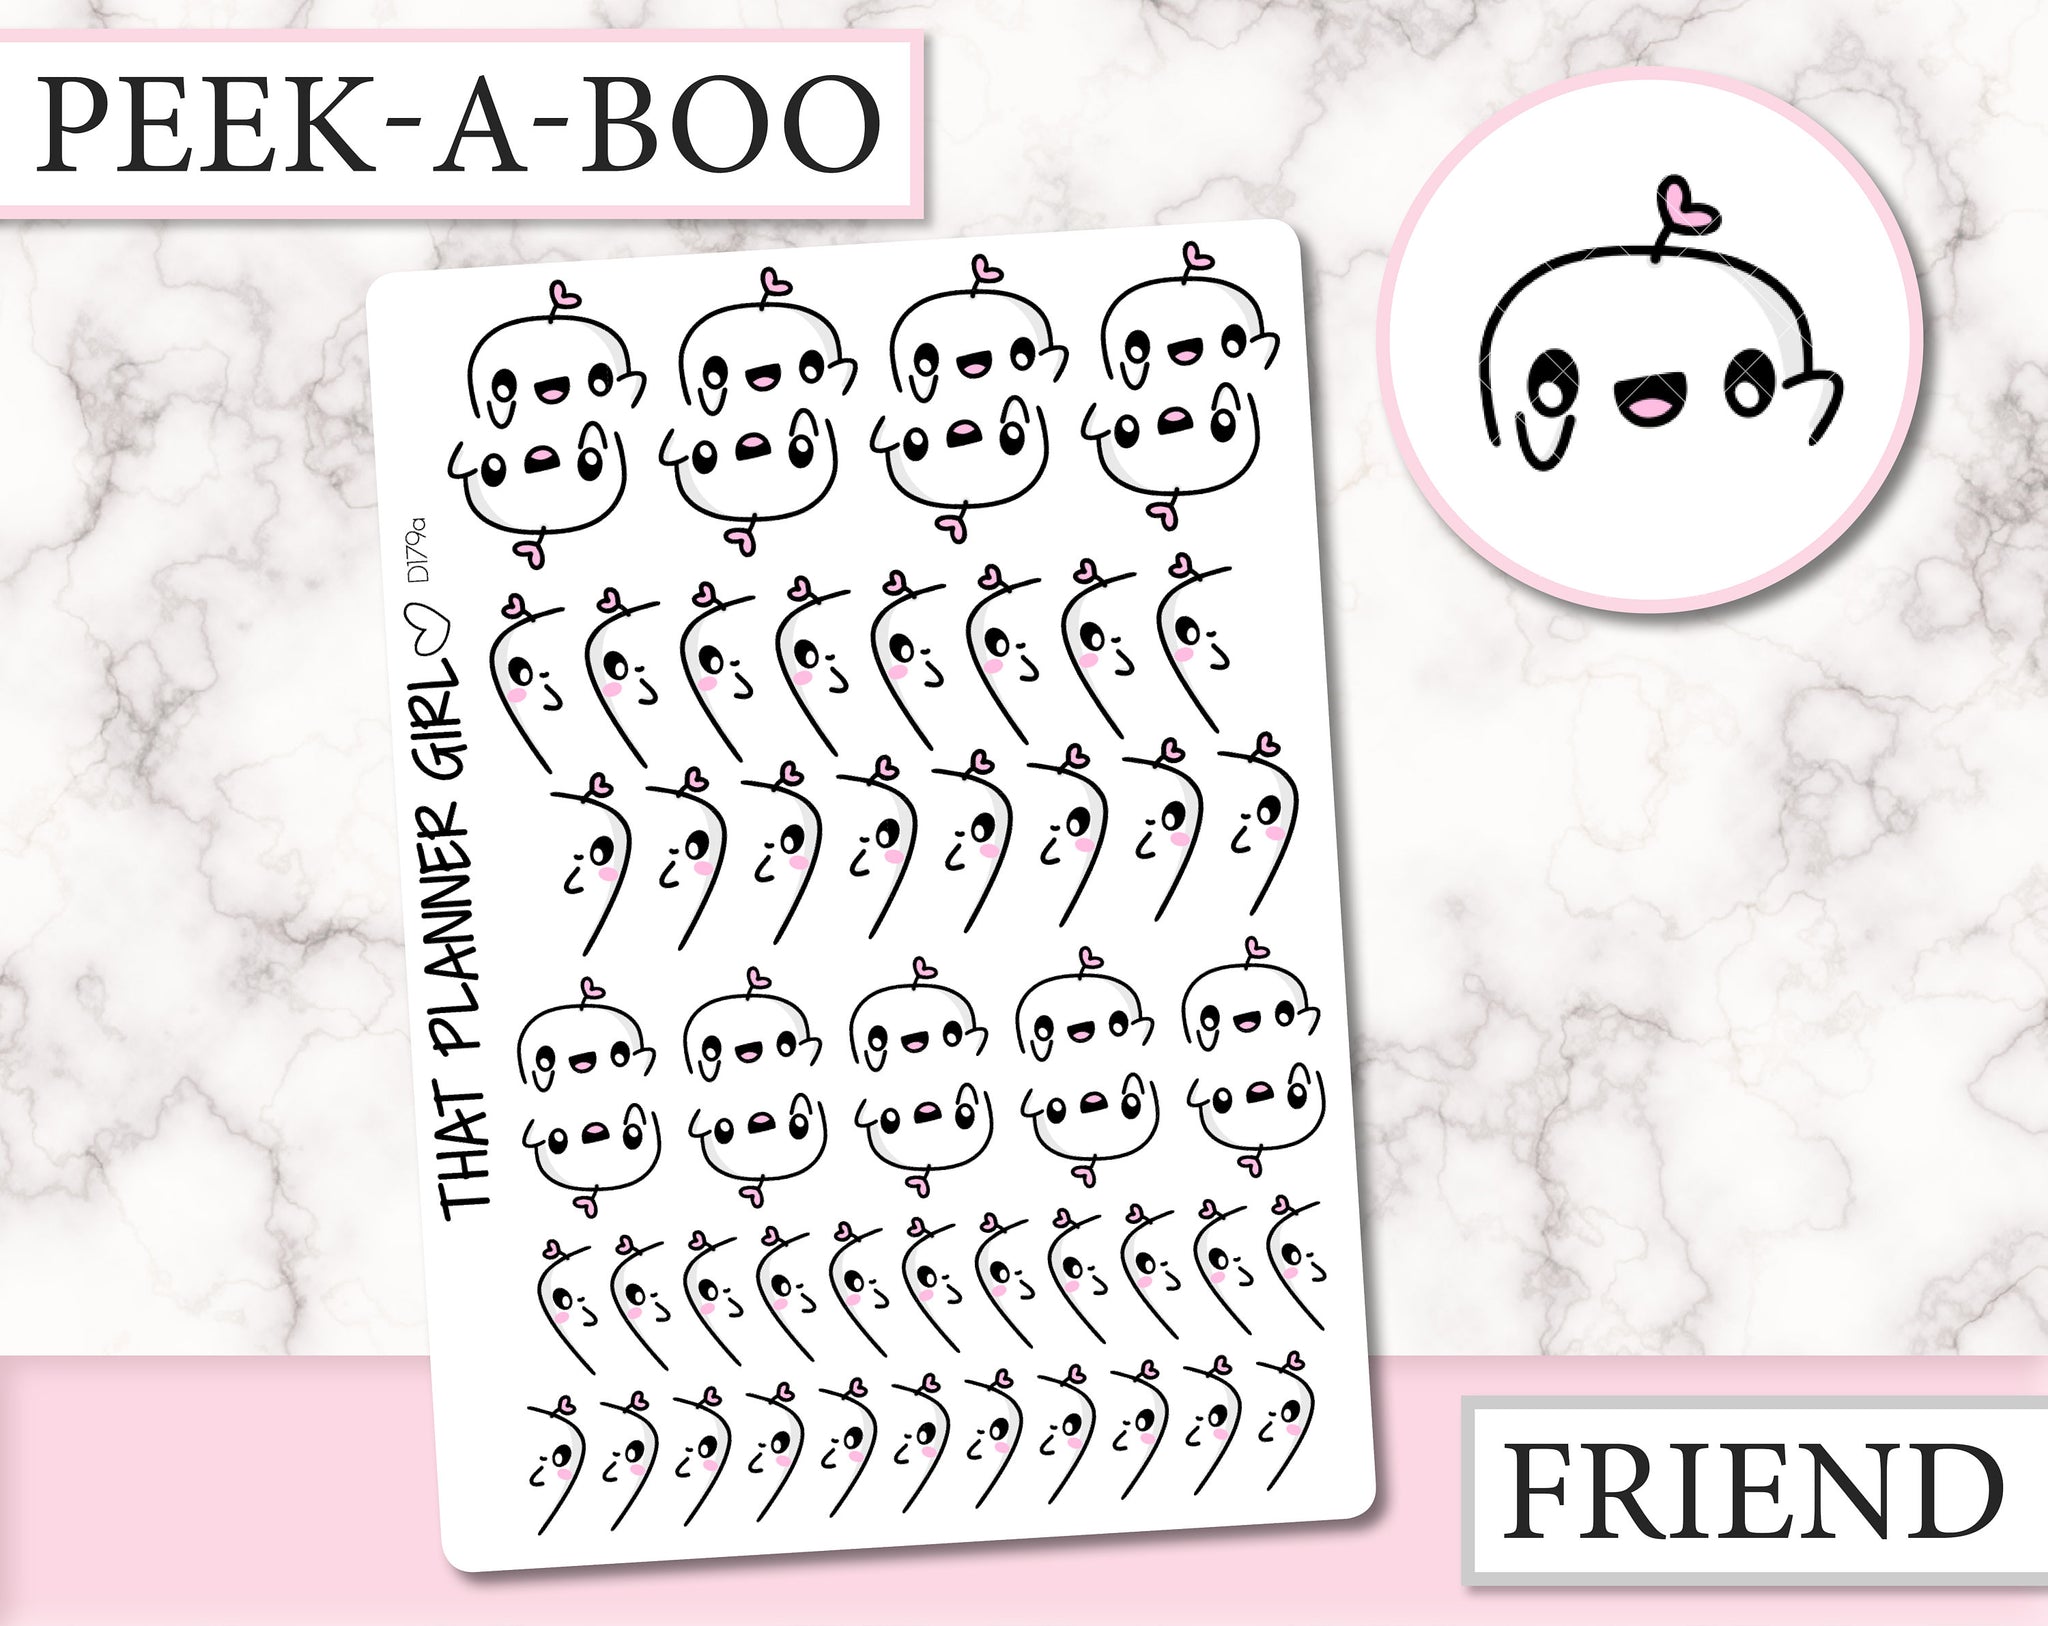 Friend Peek-a-boo | D179